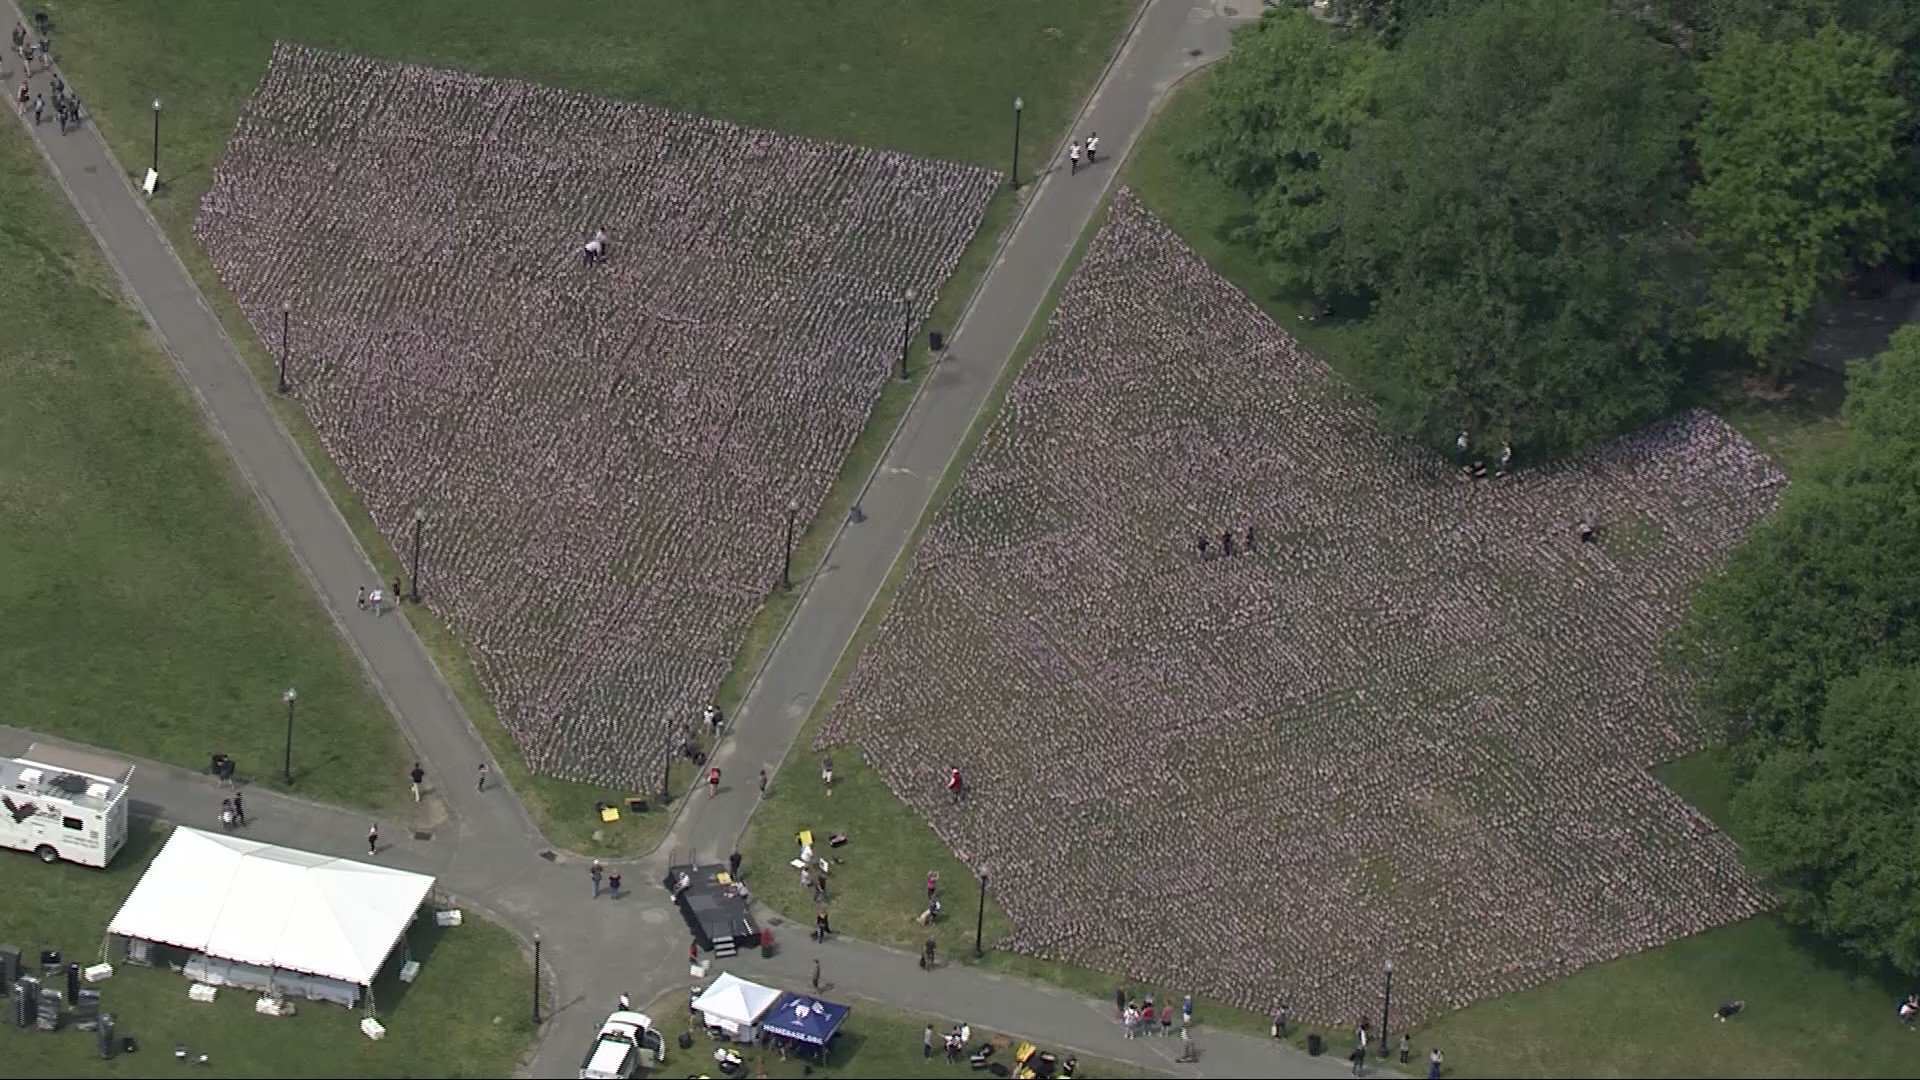 Volunteers plant 37,000 flags on Boston Common ahead of Memorial